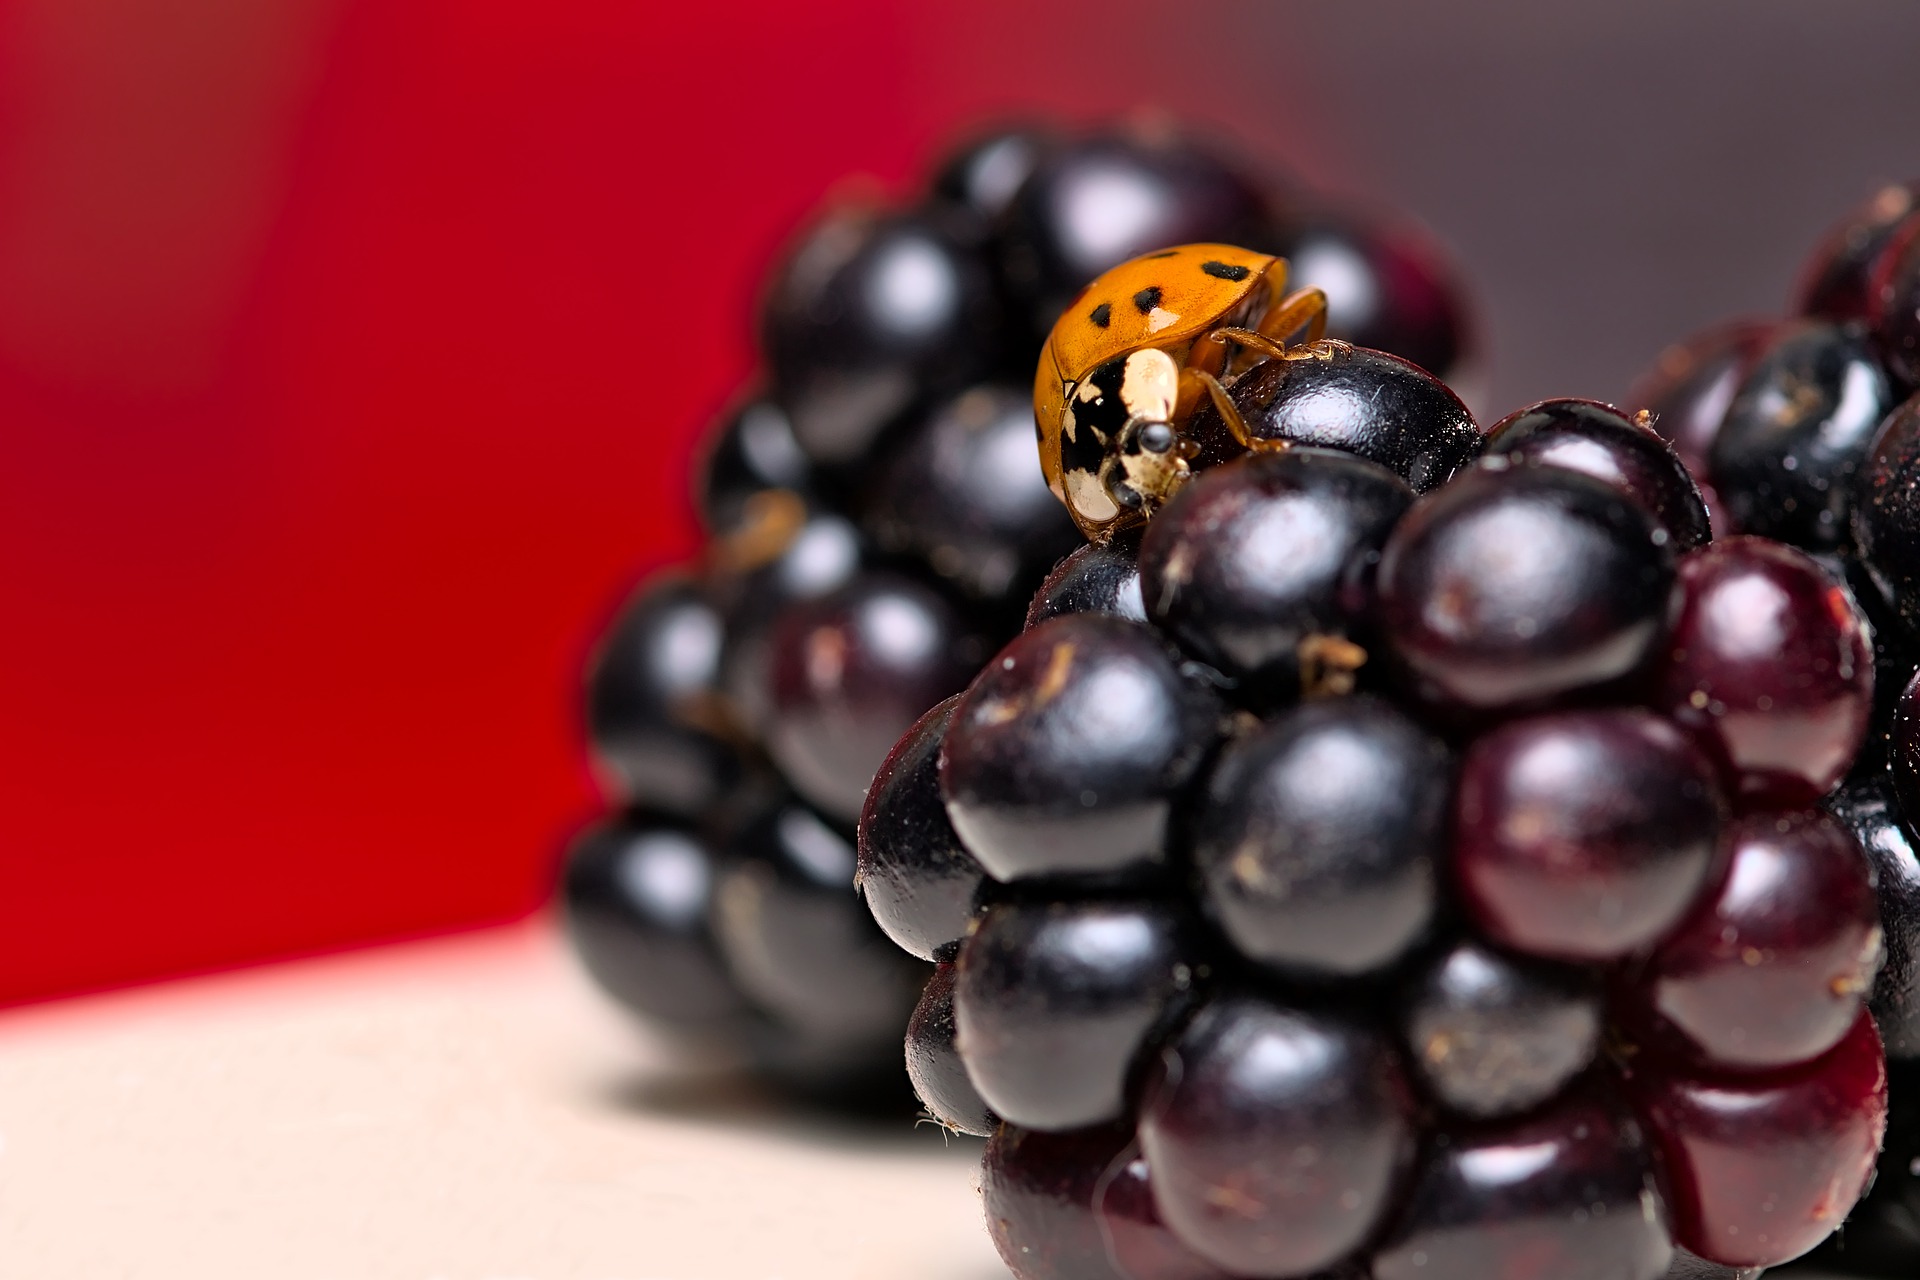 Asian lady beetle indoors on berries